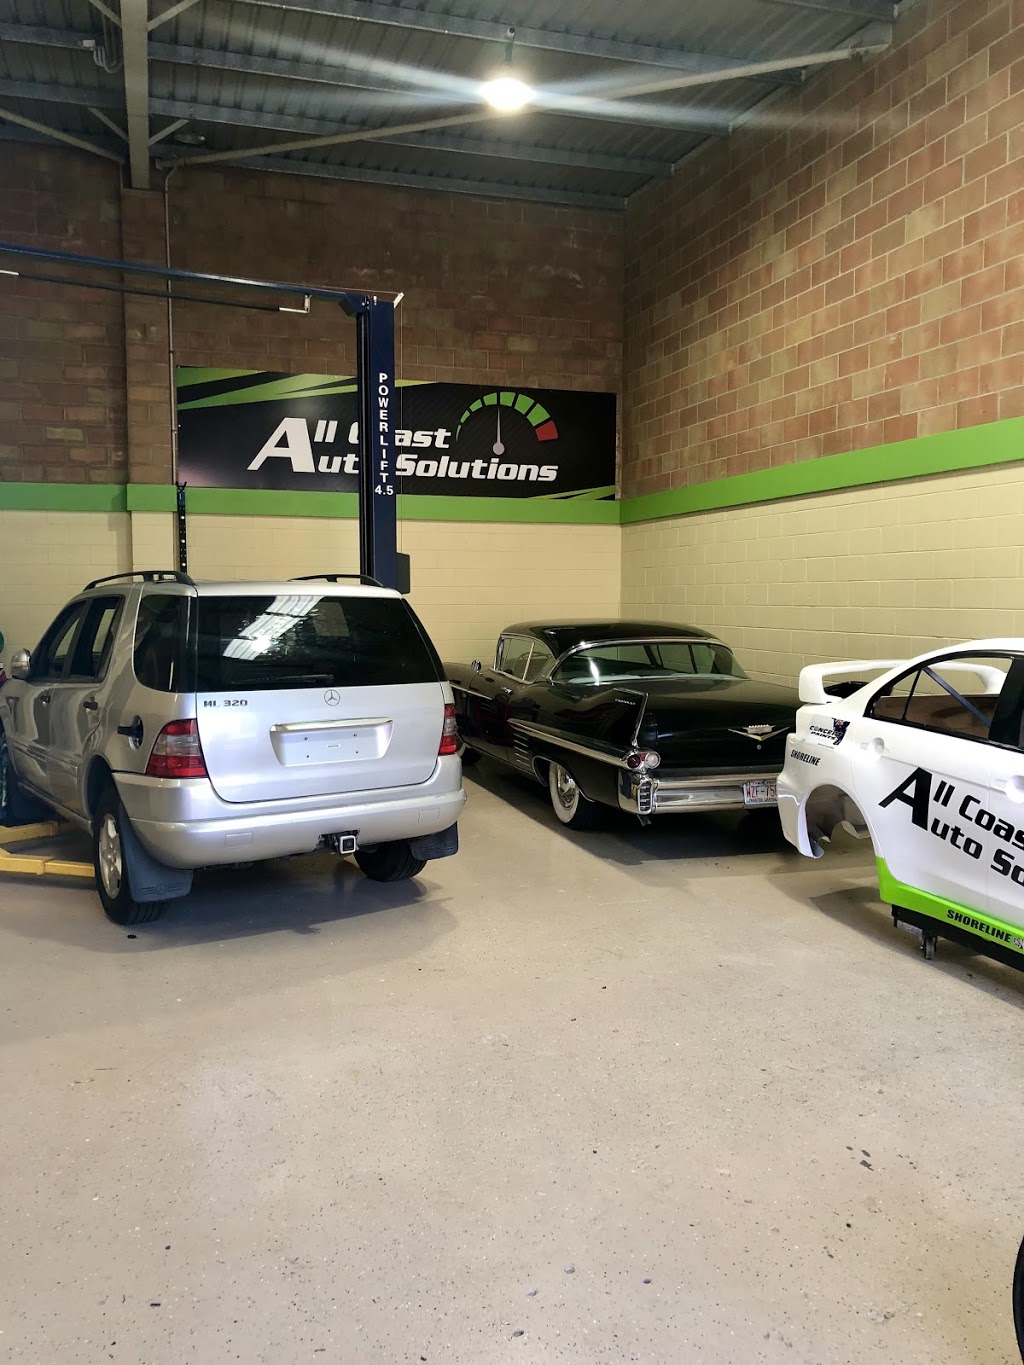 All Coast Auto Solutions | 5/54 Rene St, Noosaville QLD 4566, Australia | Phone: (07) 5412 2808